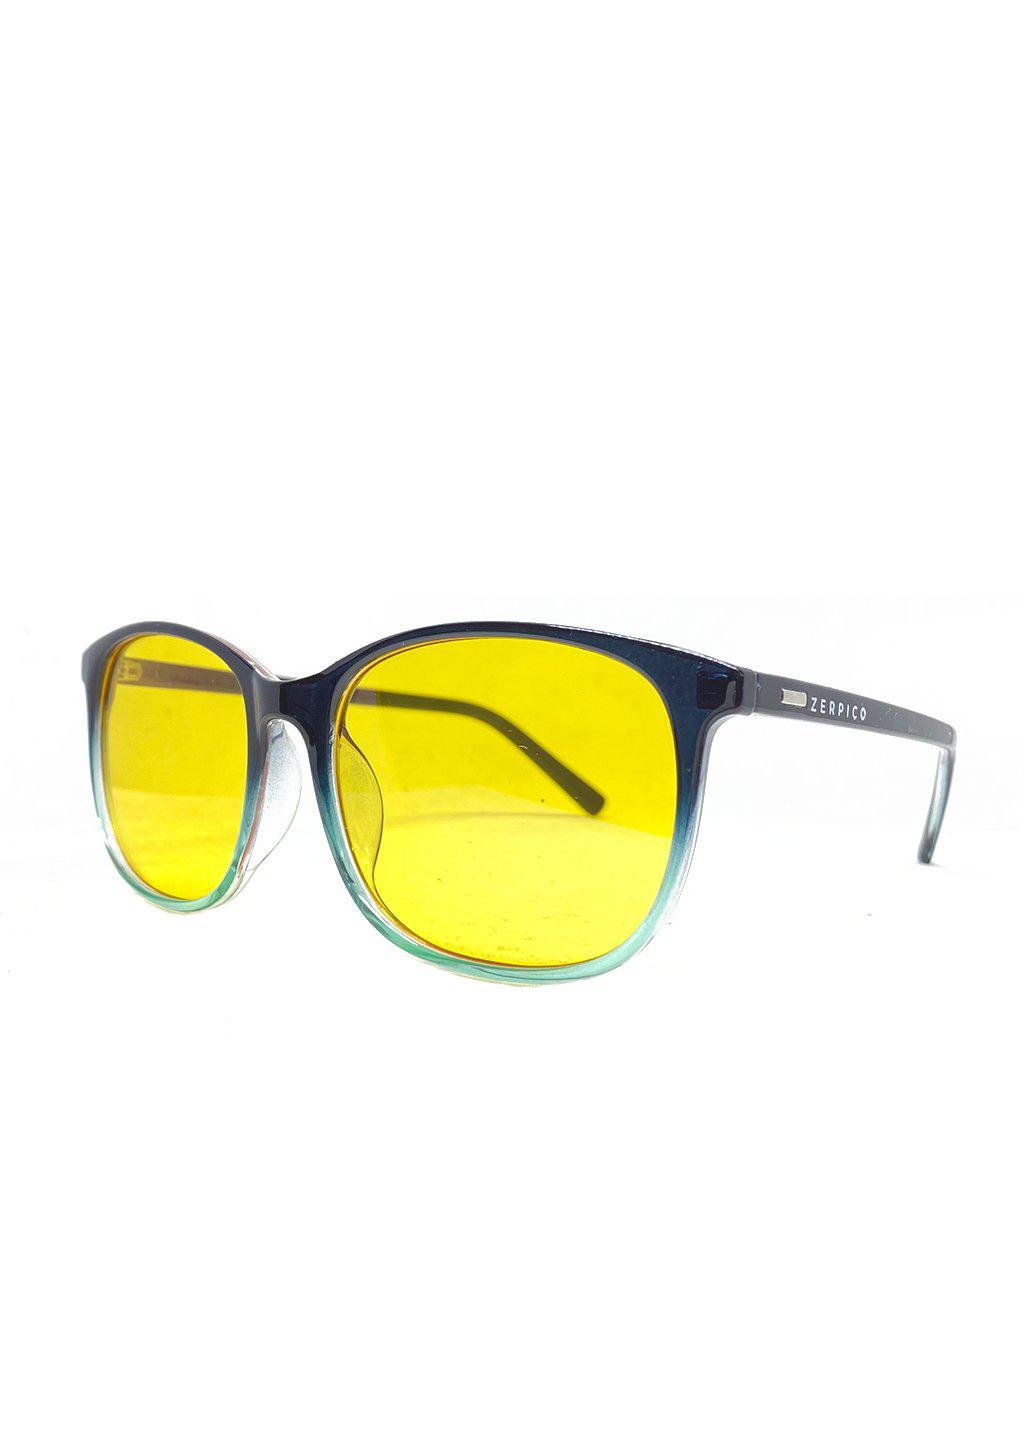 Blaulichtblockierung - Nexus - Blue-light glasses / Gaming glasses - Neo-4